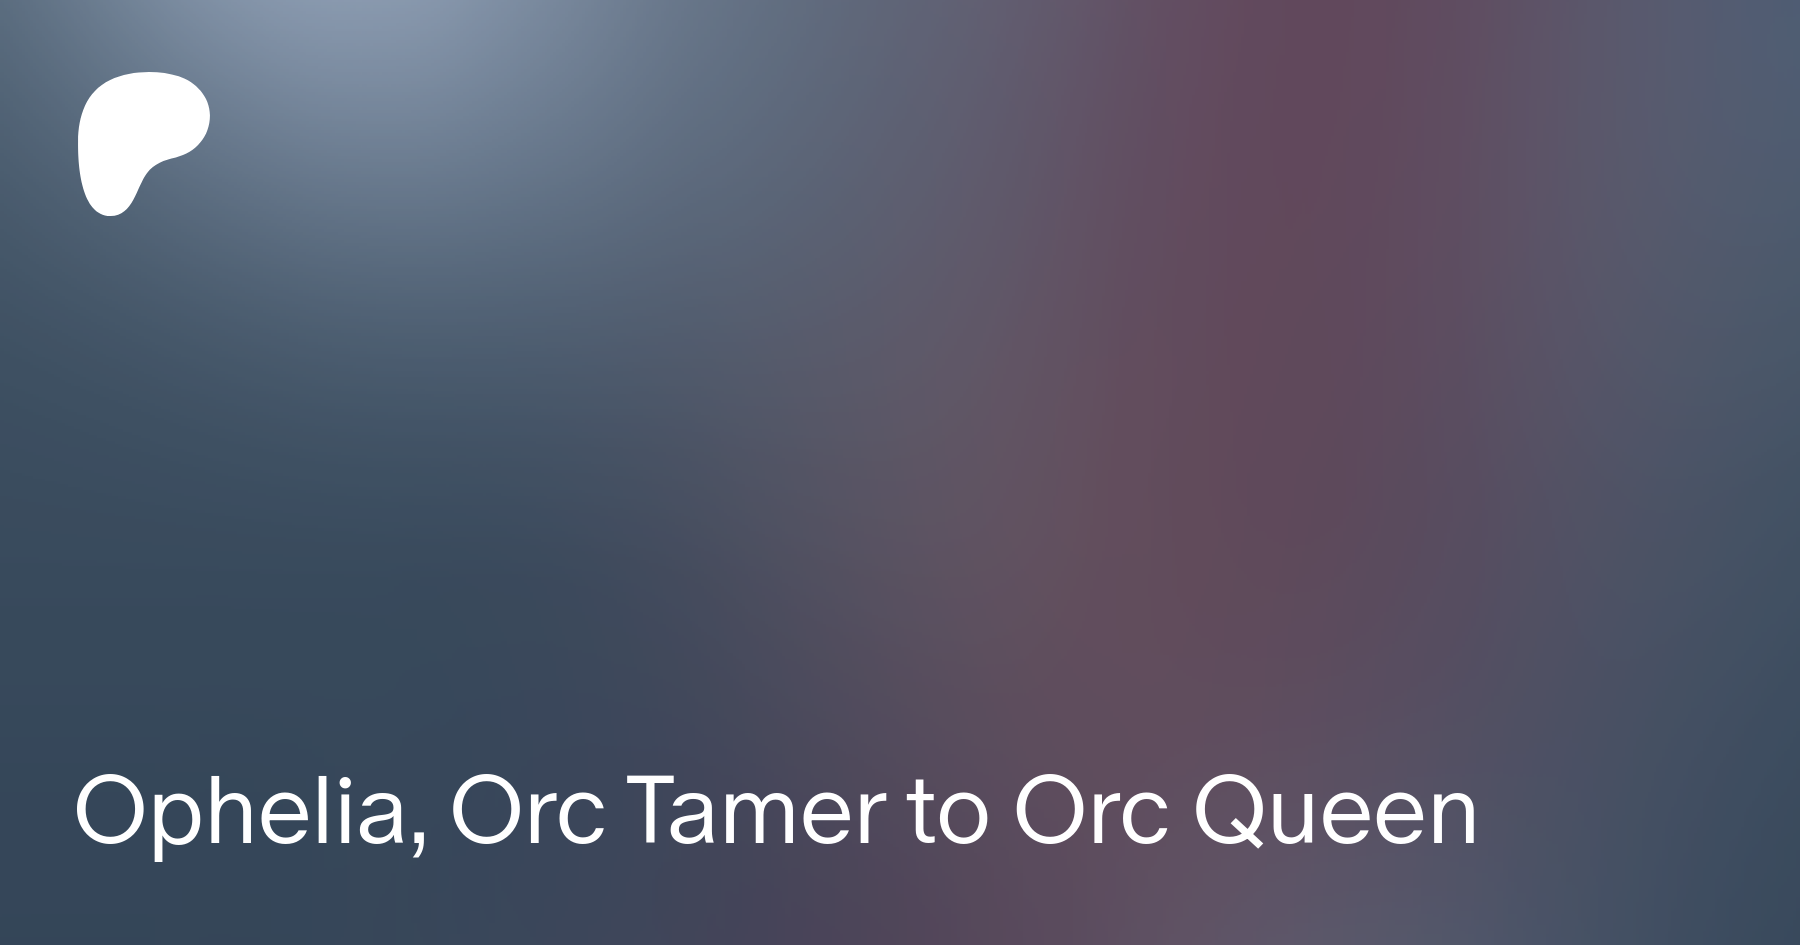 Ophelia orc tamer